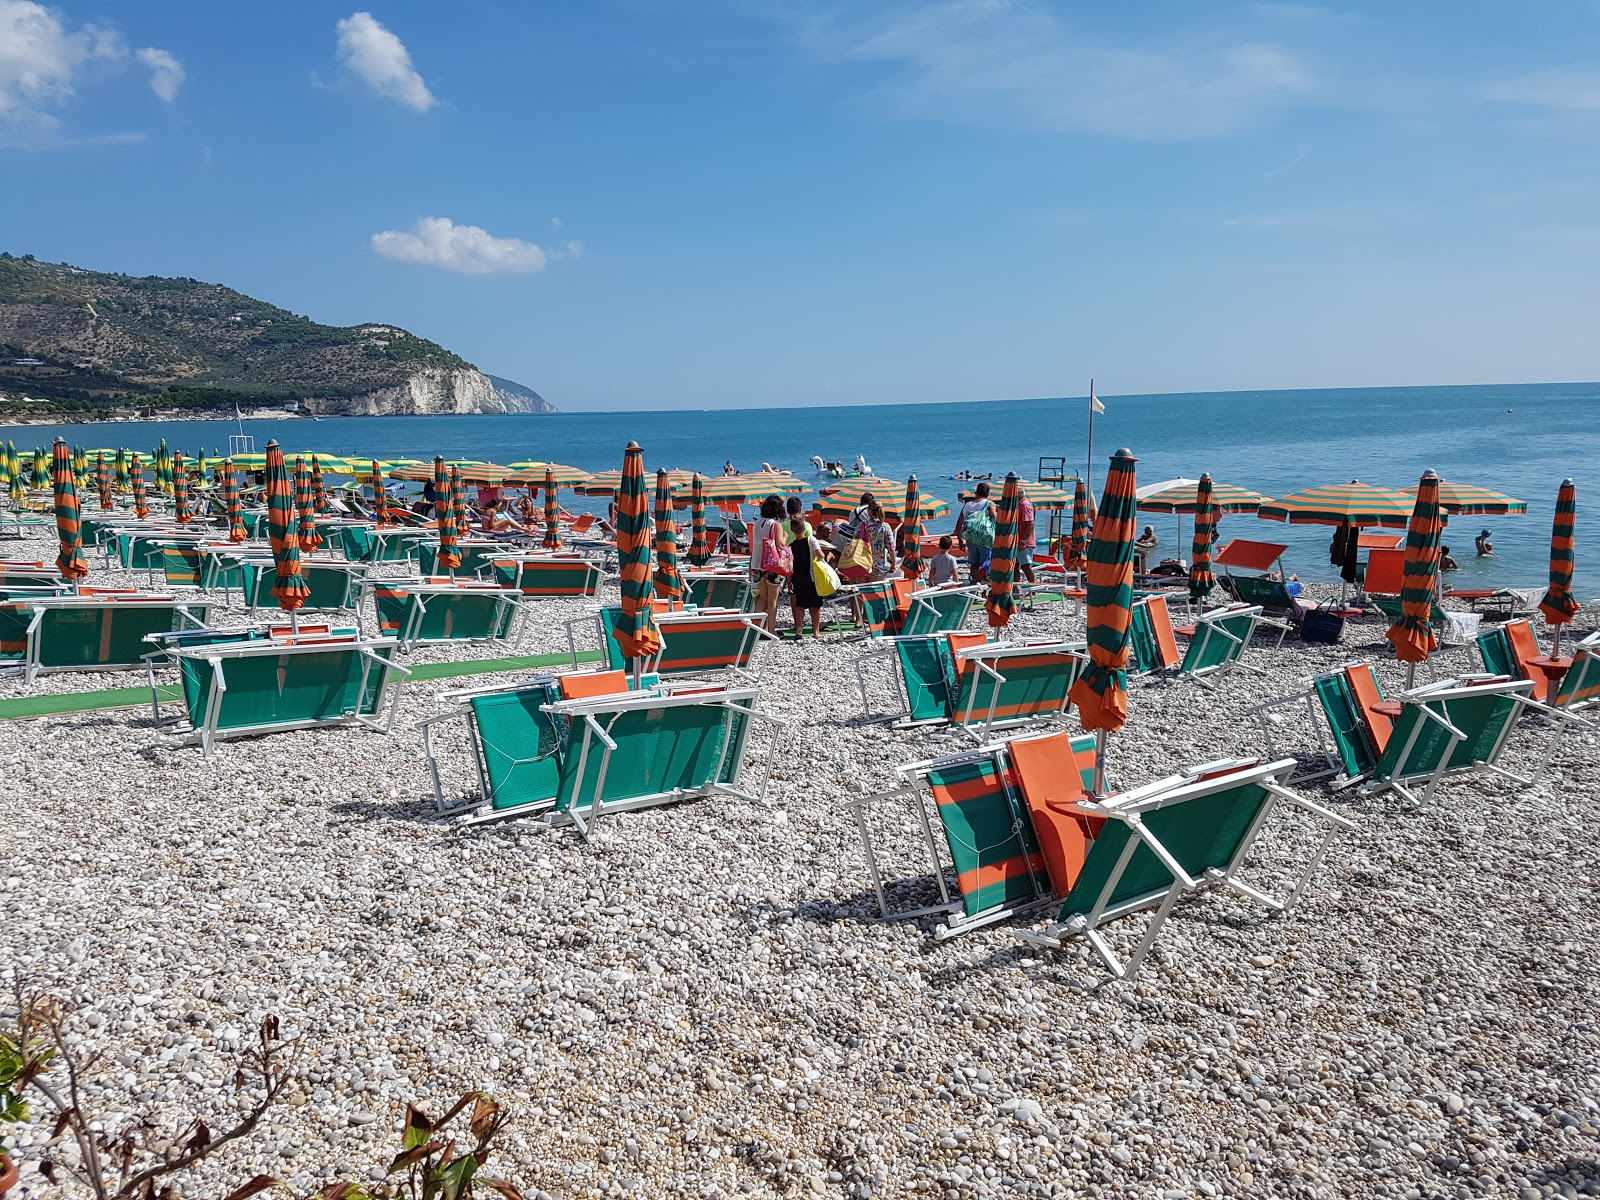 Photo of Spiaggia di Piana di Mattinata - popular place among relax connoisseurs